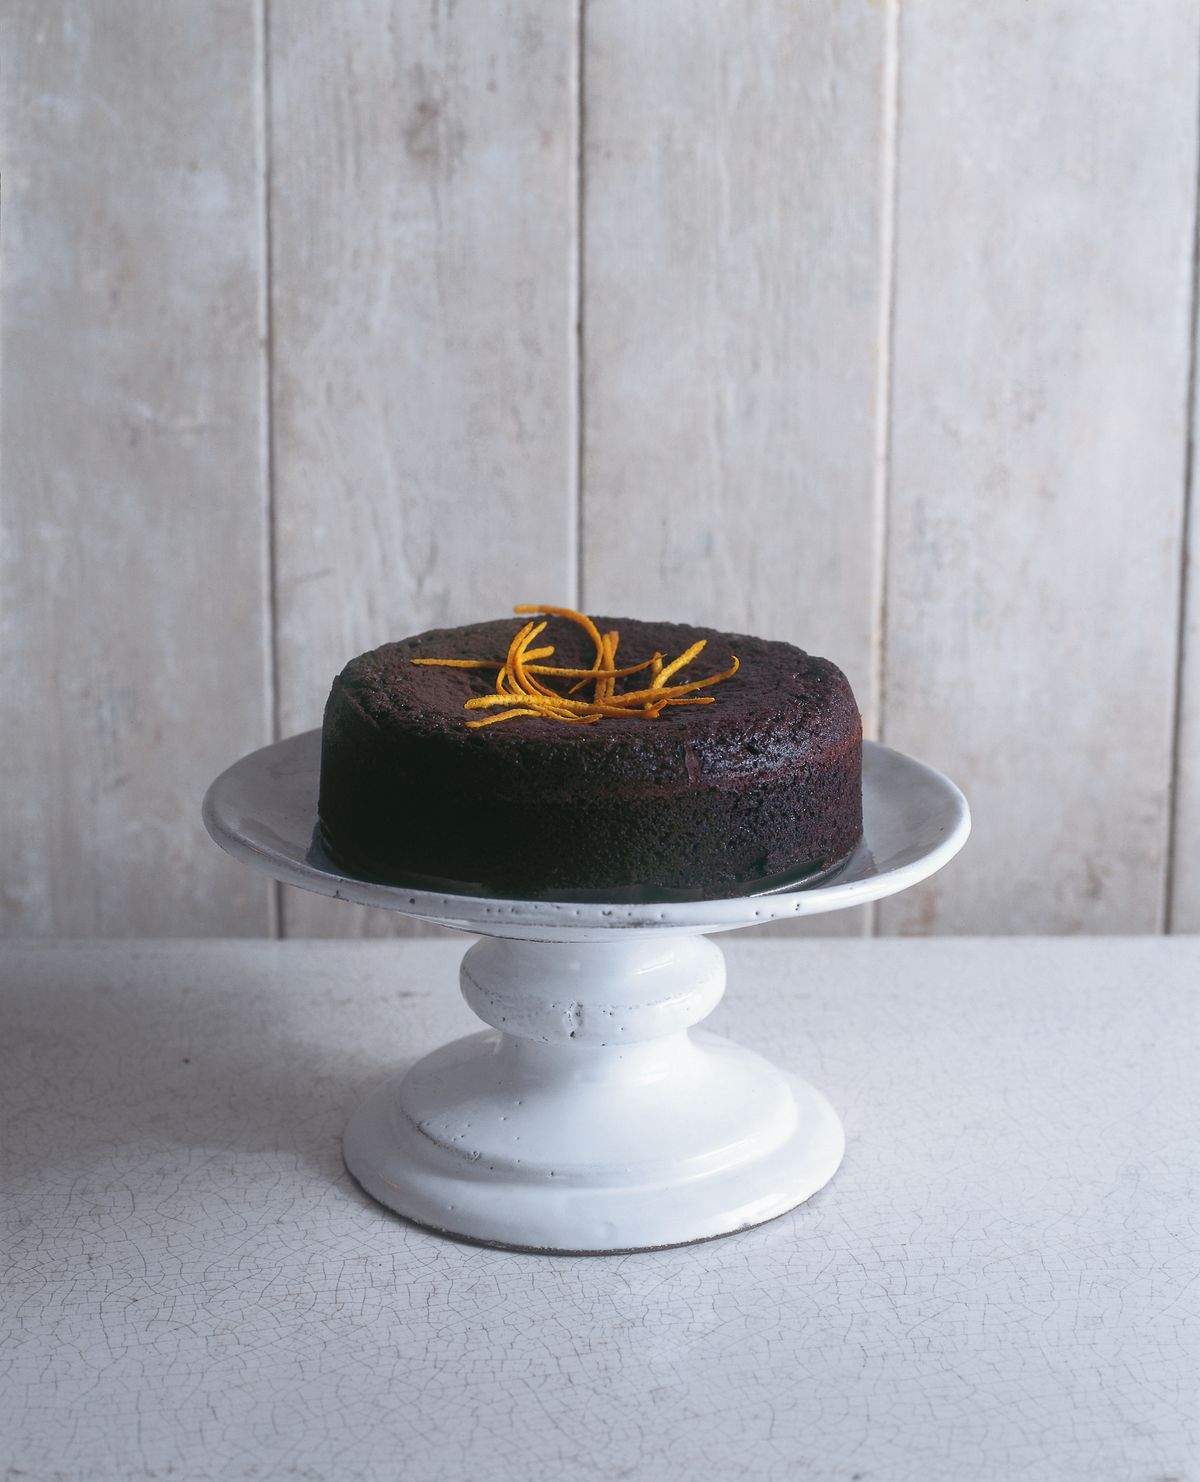 Nigella Lawson’s Chocolate Orange Cake